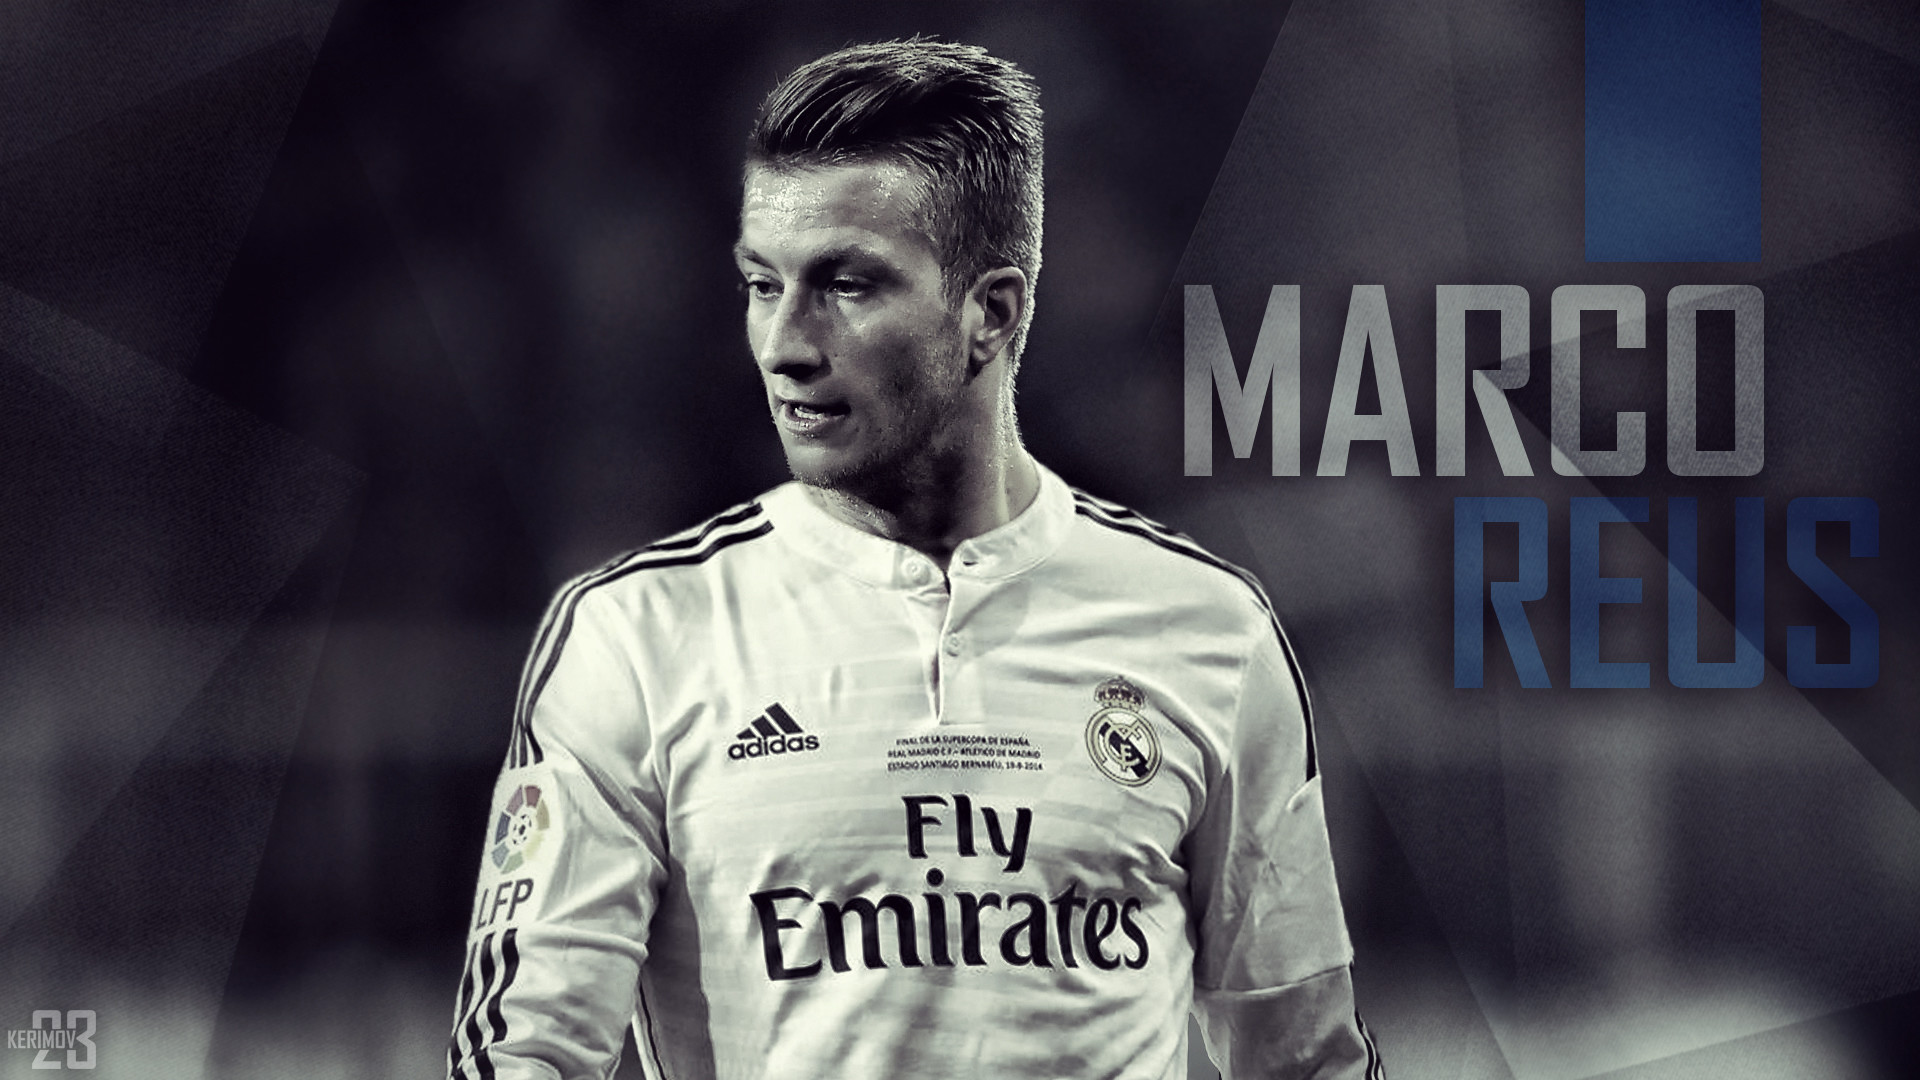 1920x1080 ... Marco Reus - Real Madrid by Kerimov23